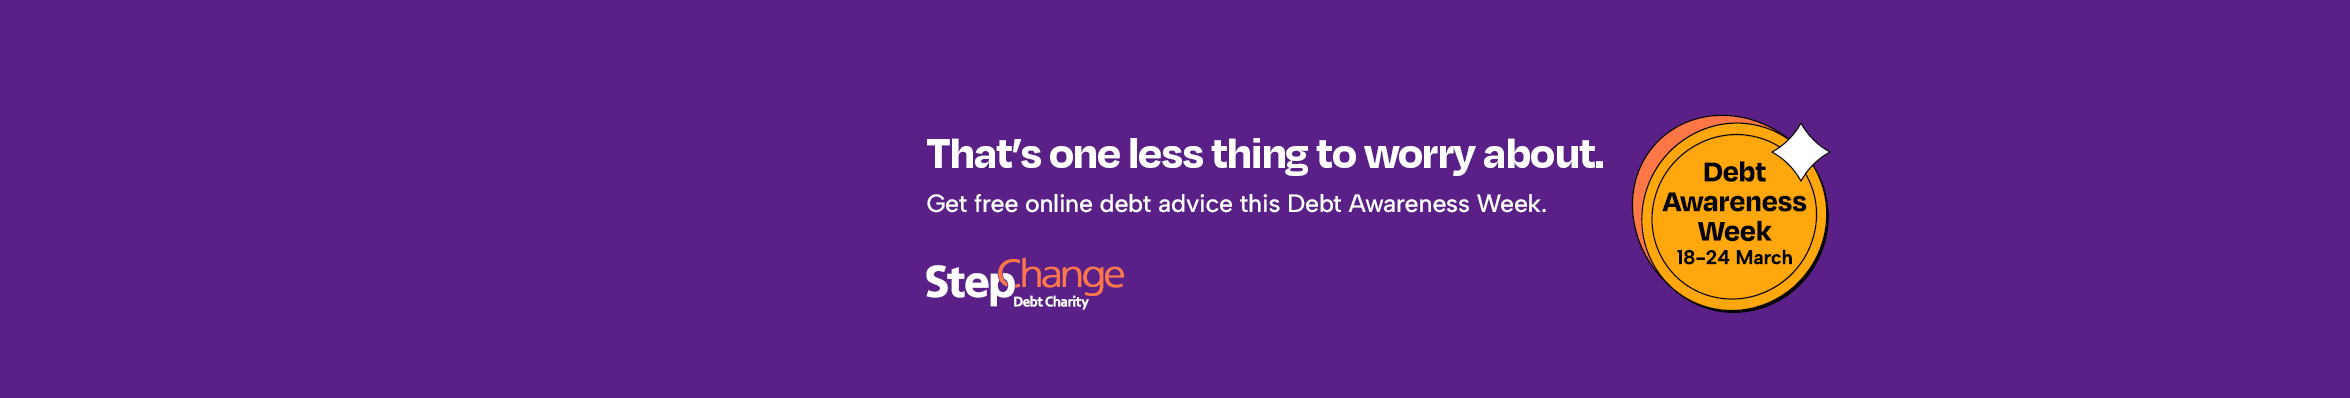 Debt Awareness Week